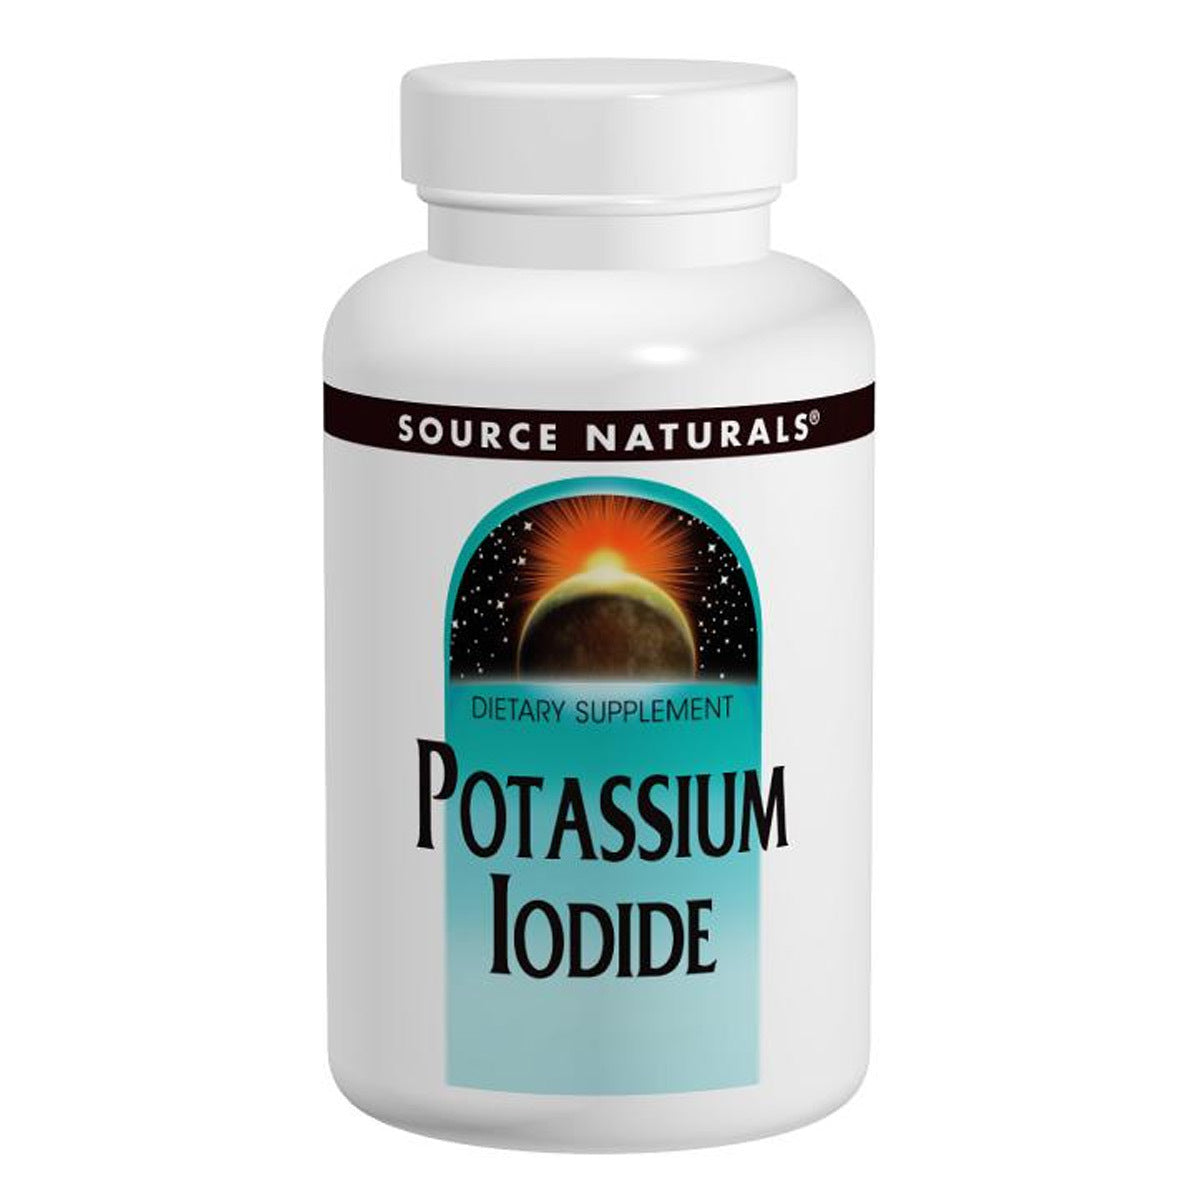 Primary image of Potassium Iodide